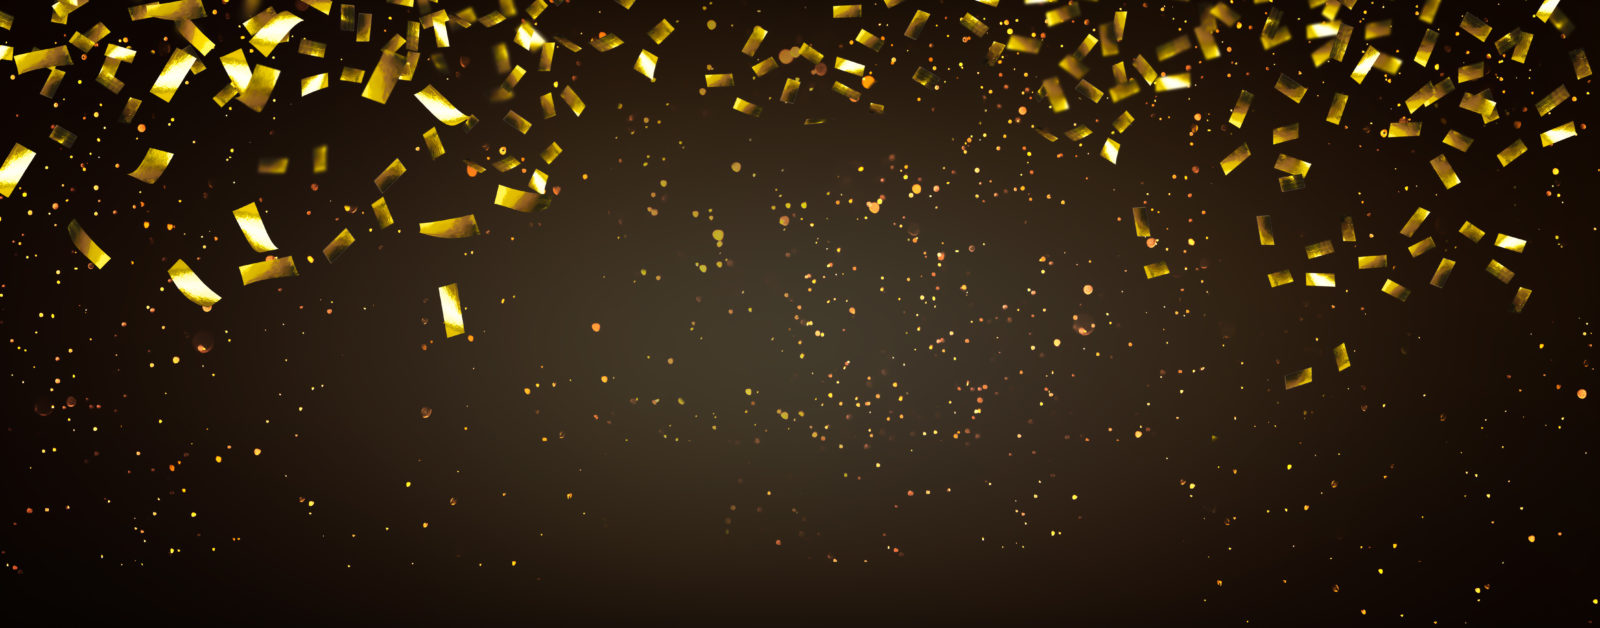 Gold Confetti in dark background, showing celebration